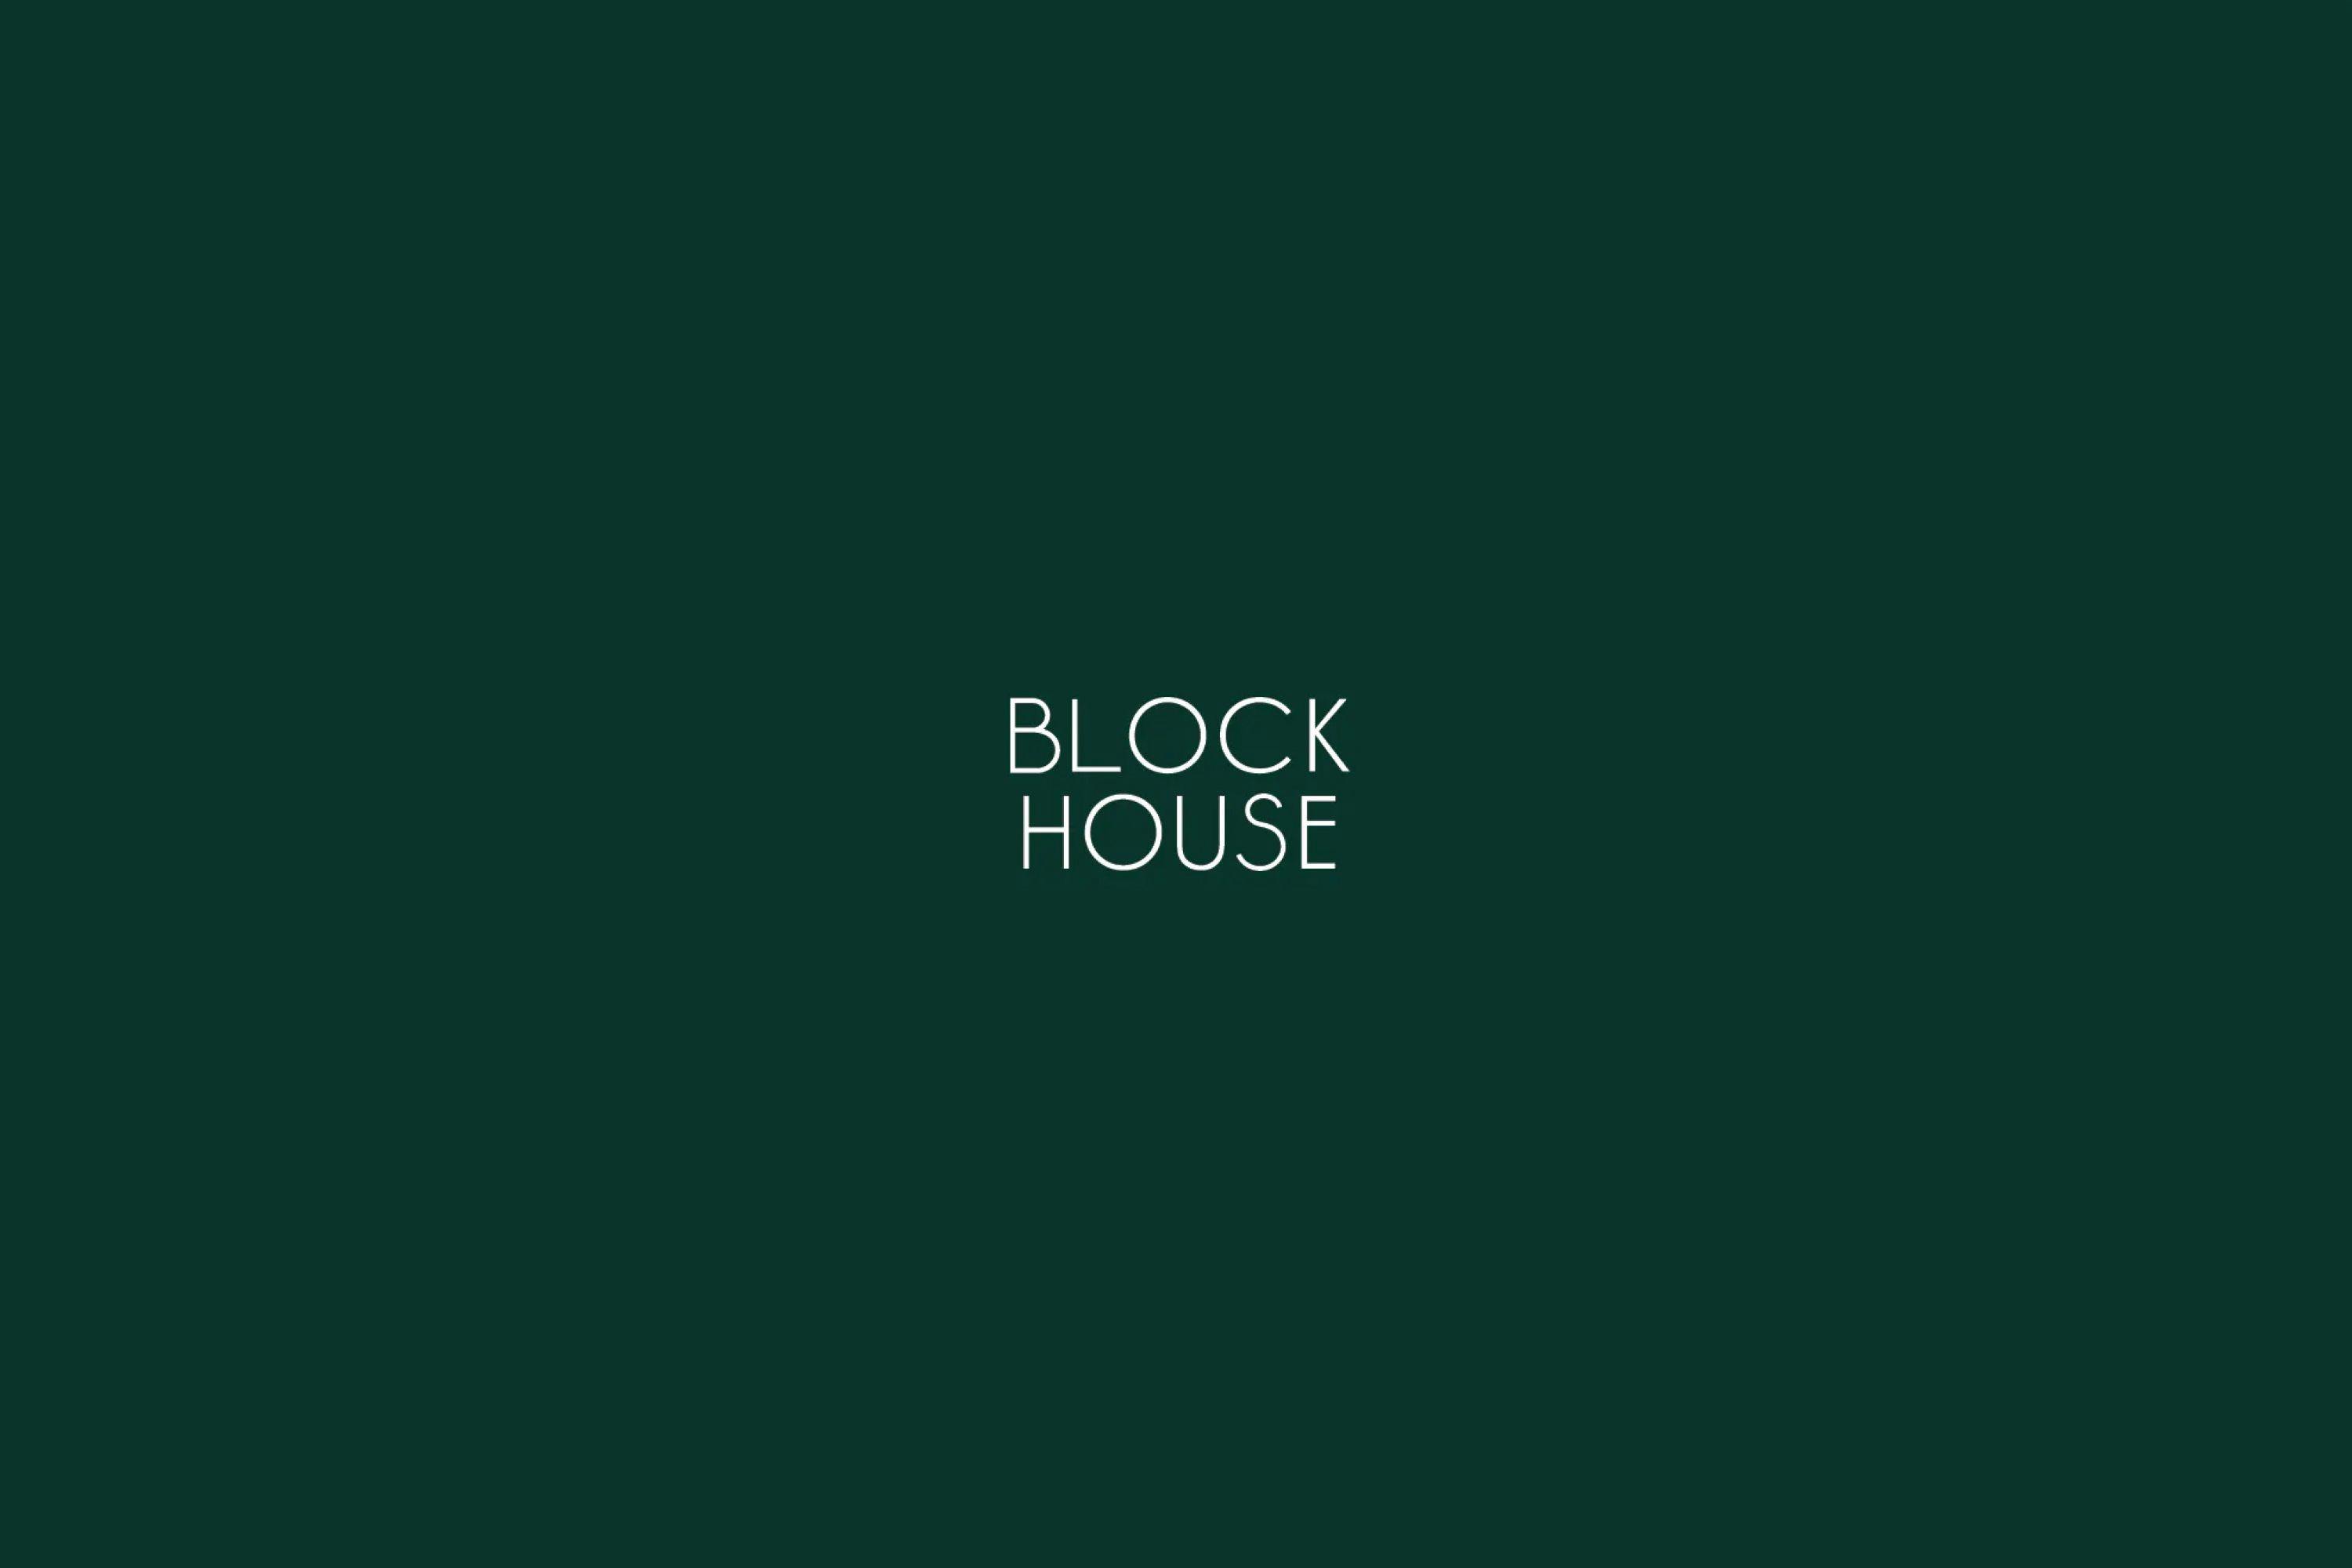 Block House written against a black background